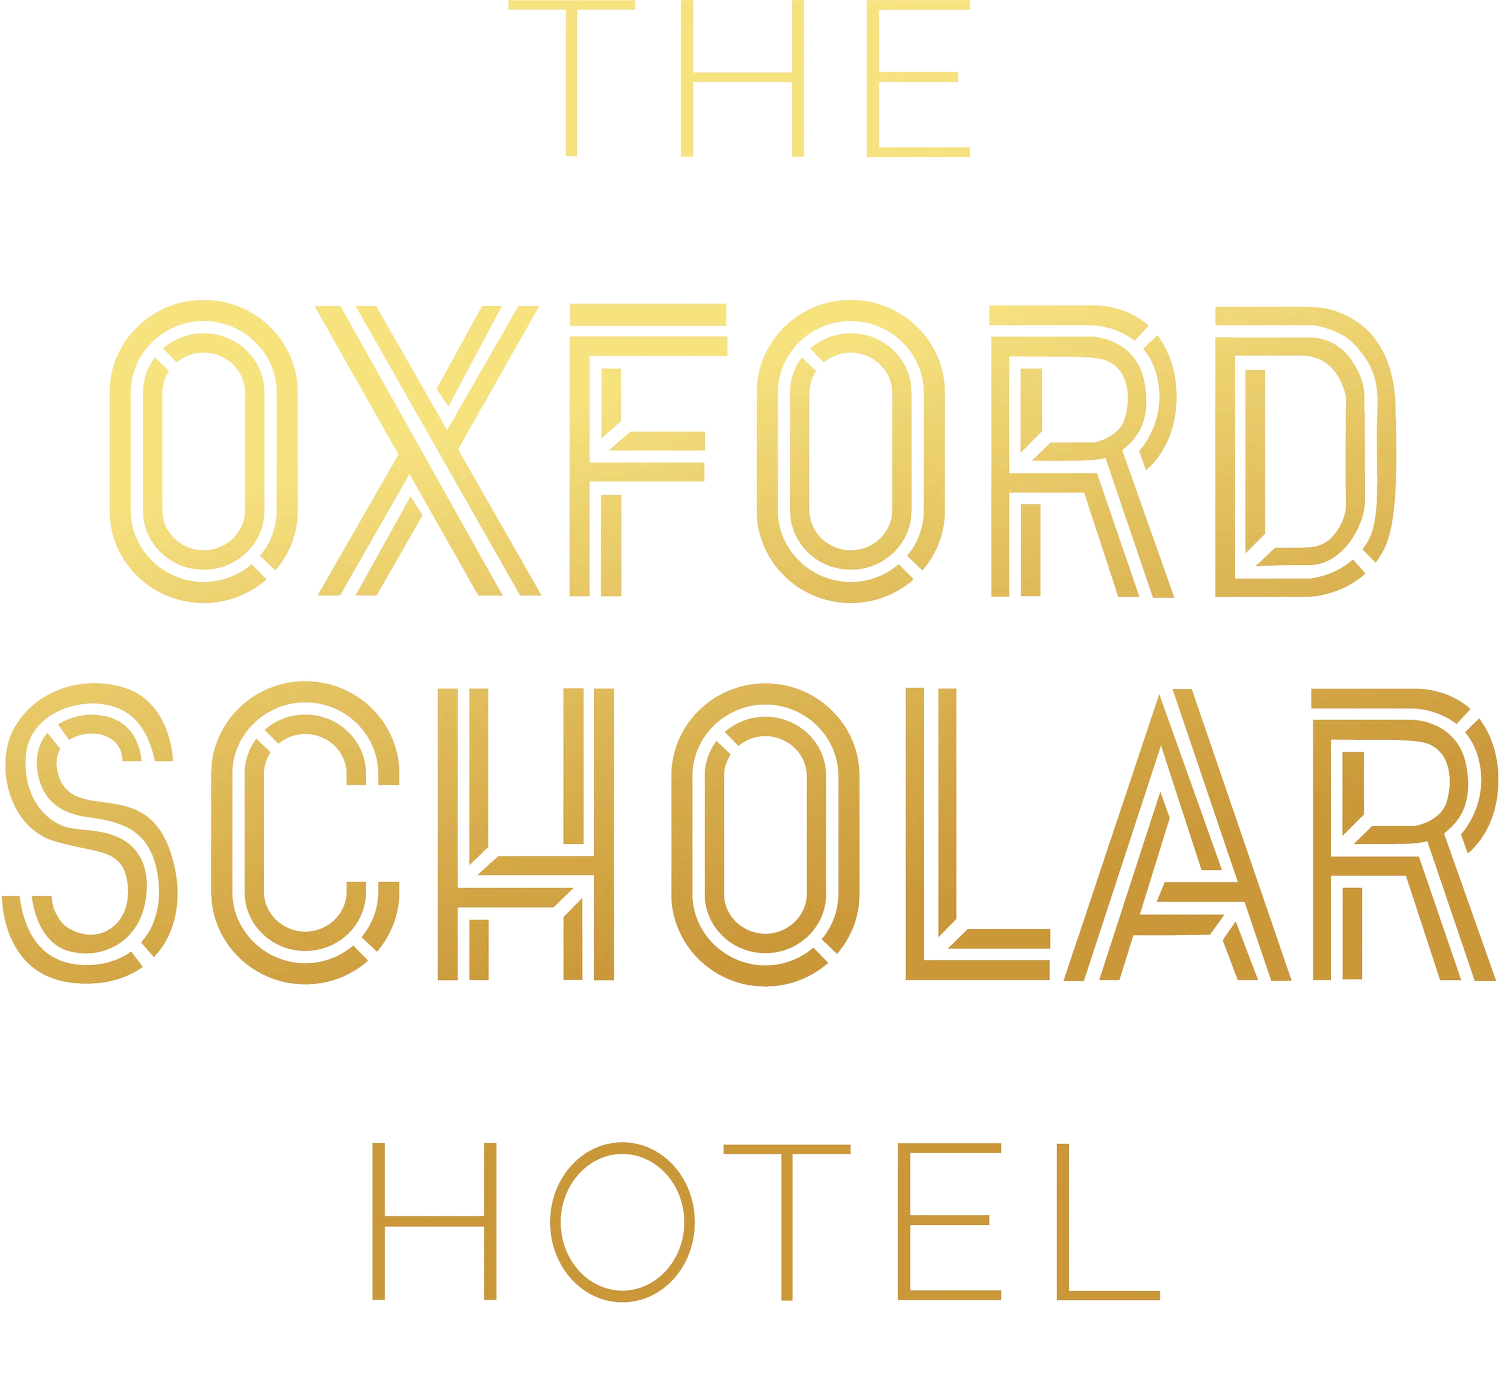 The Oxford Scholar